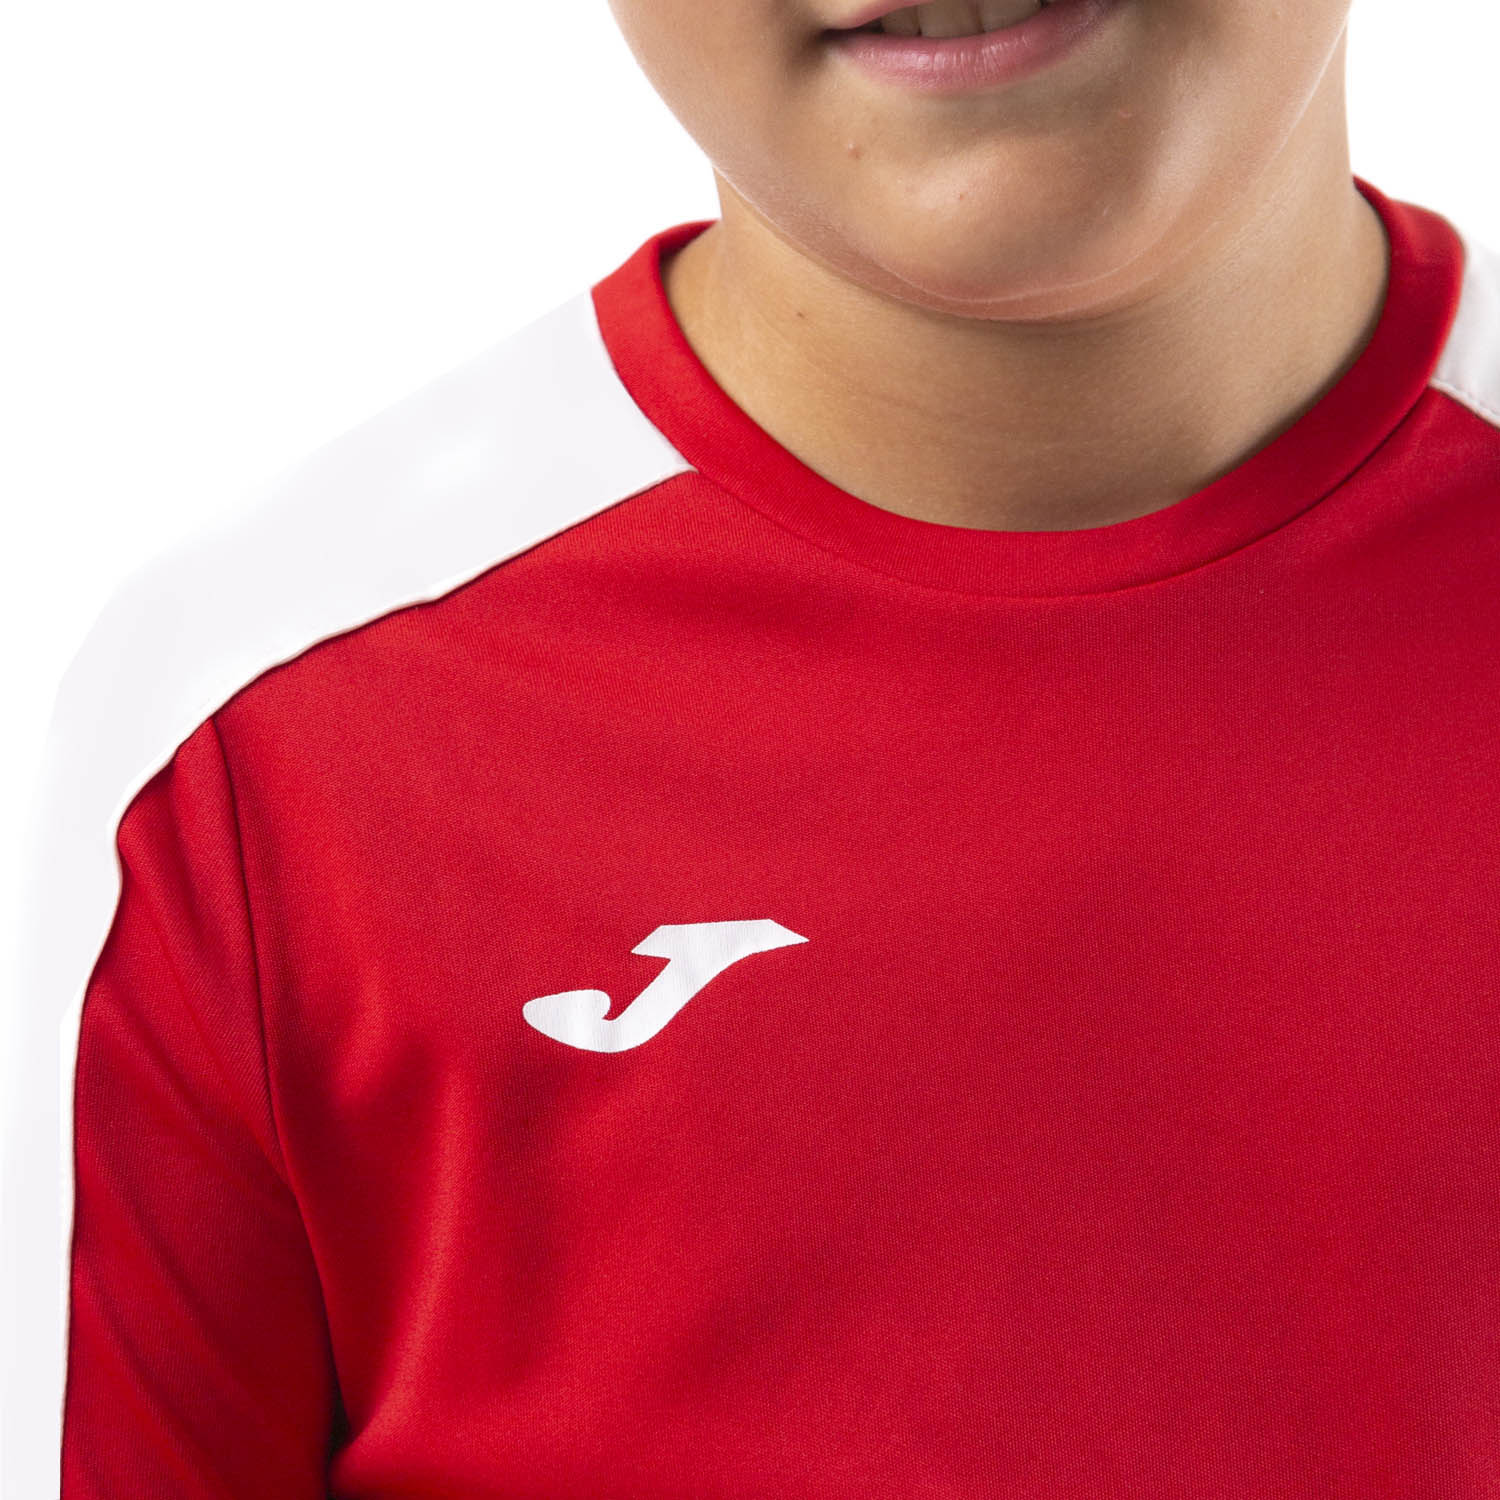 Joma Academy III Camiseta Niño - Red/White